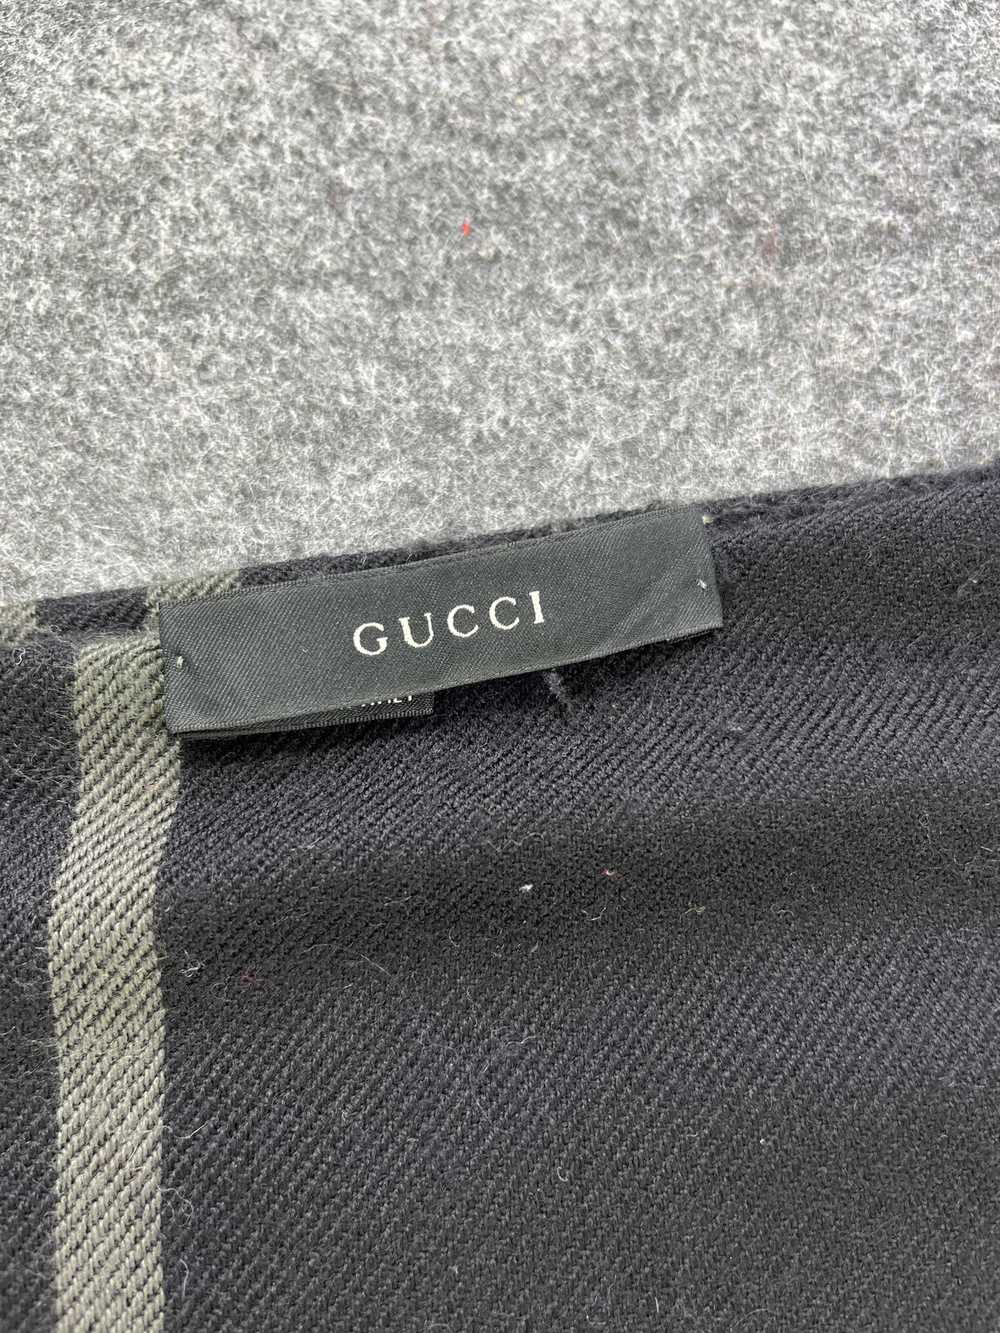 Gucci × Vintage Gucci Scarf / Muffler / Neckwear … - image 6